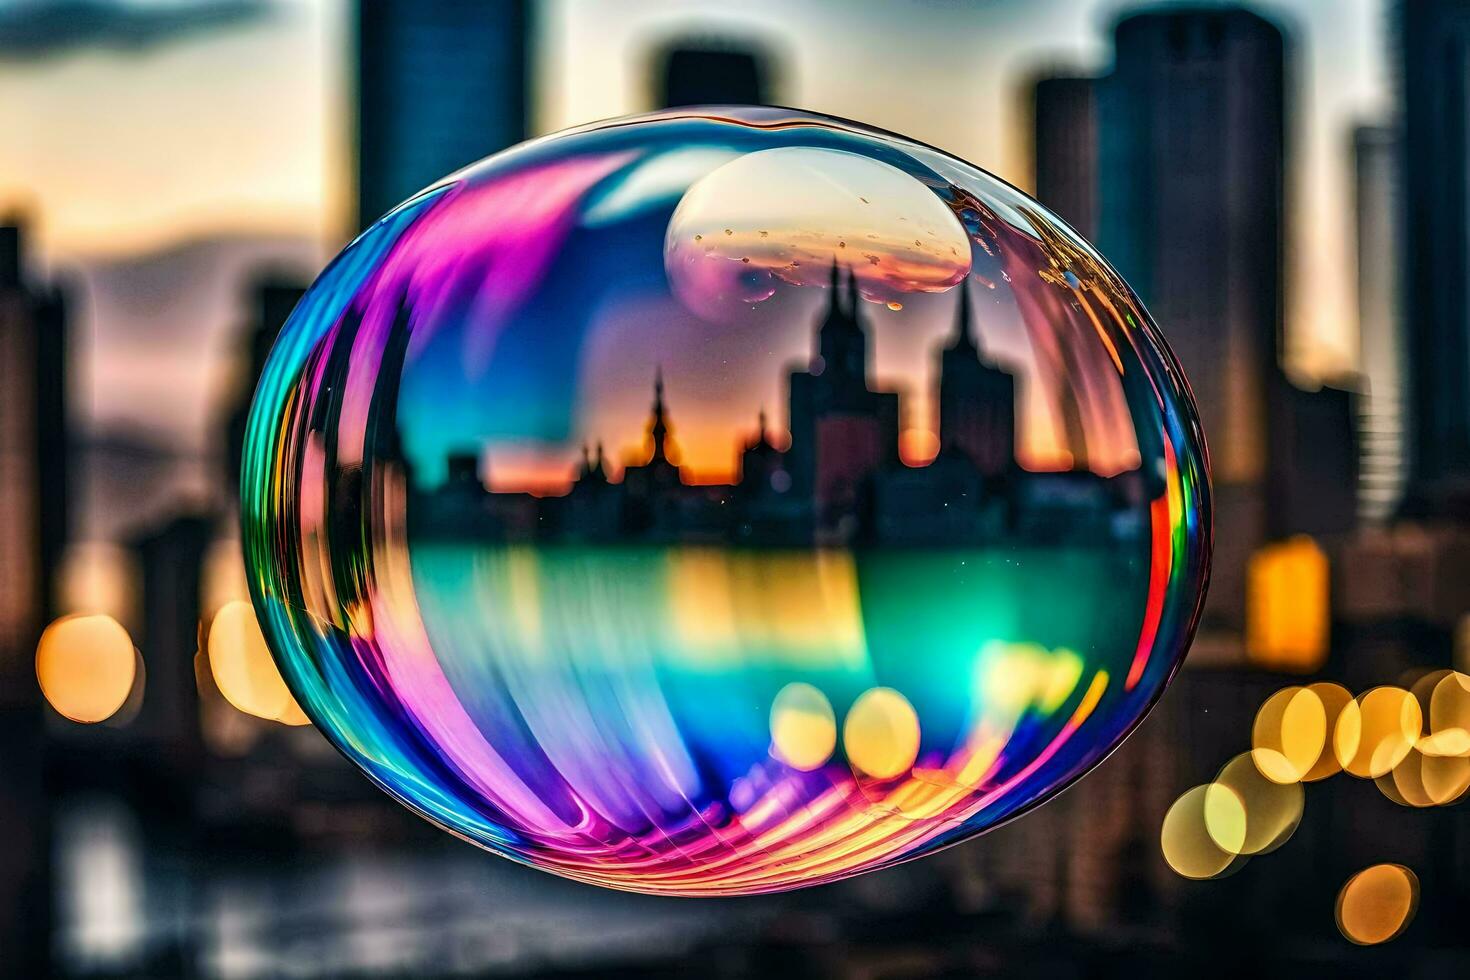 ai genererad en färgrik bubbla med en stad i de bakgrund foto